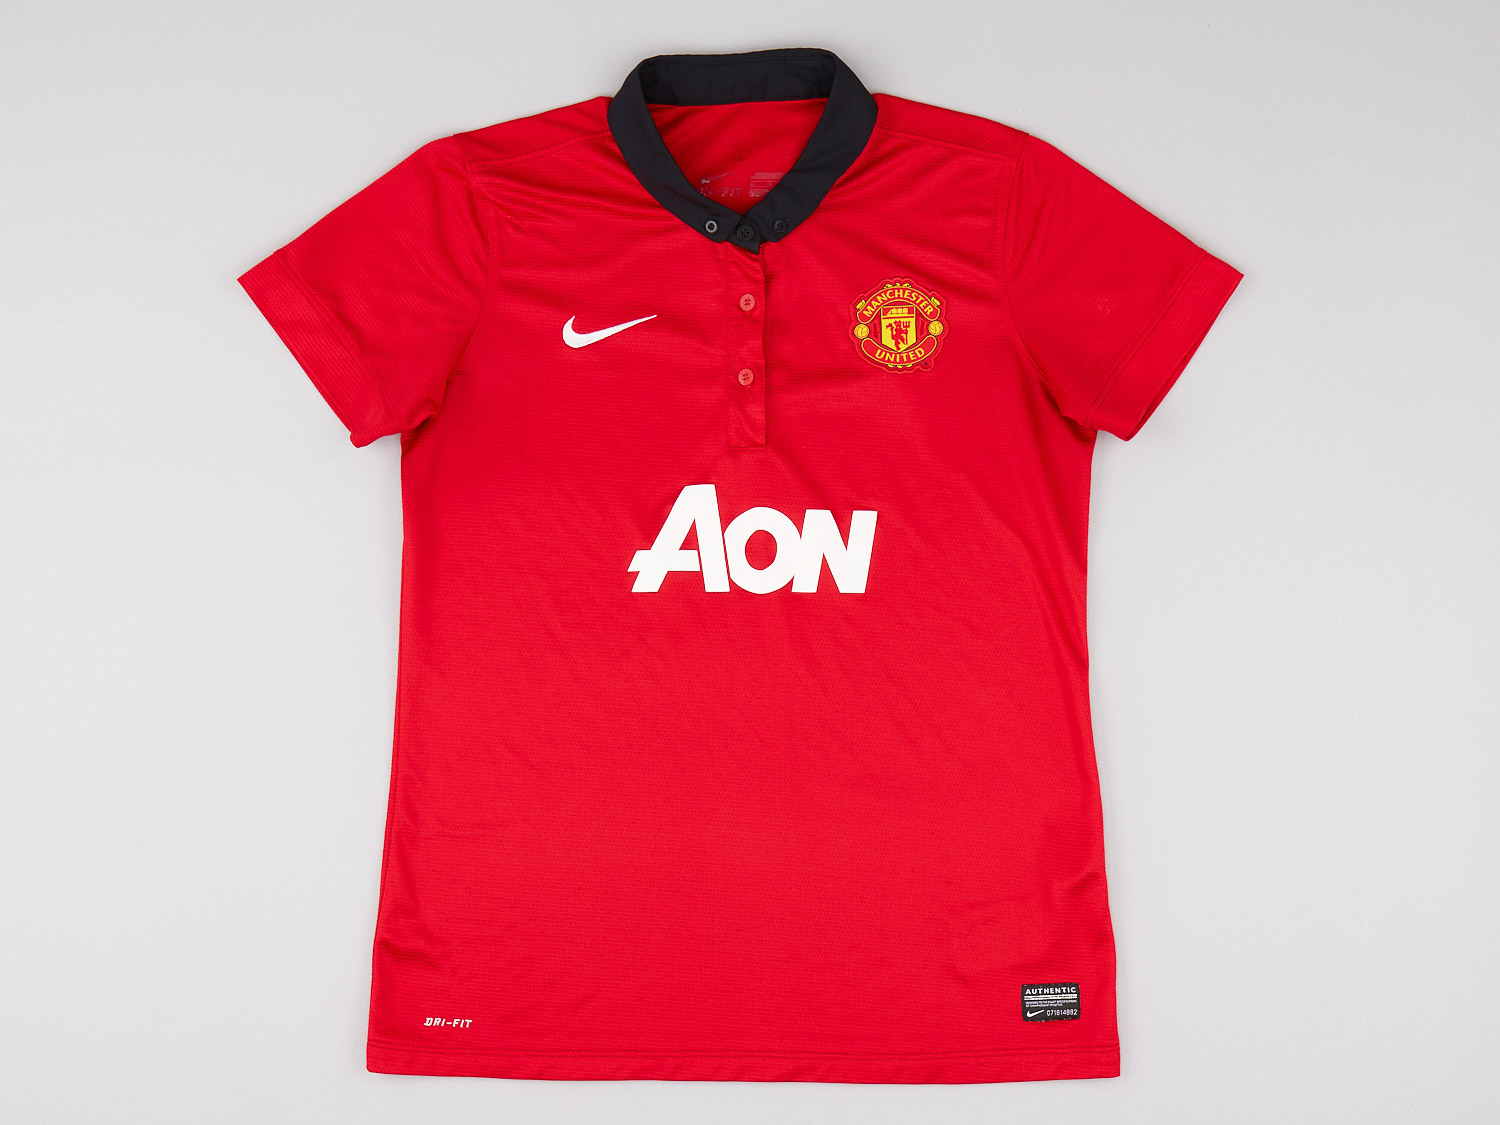 2013-14 Manchester United Home Shirt Women's ()